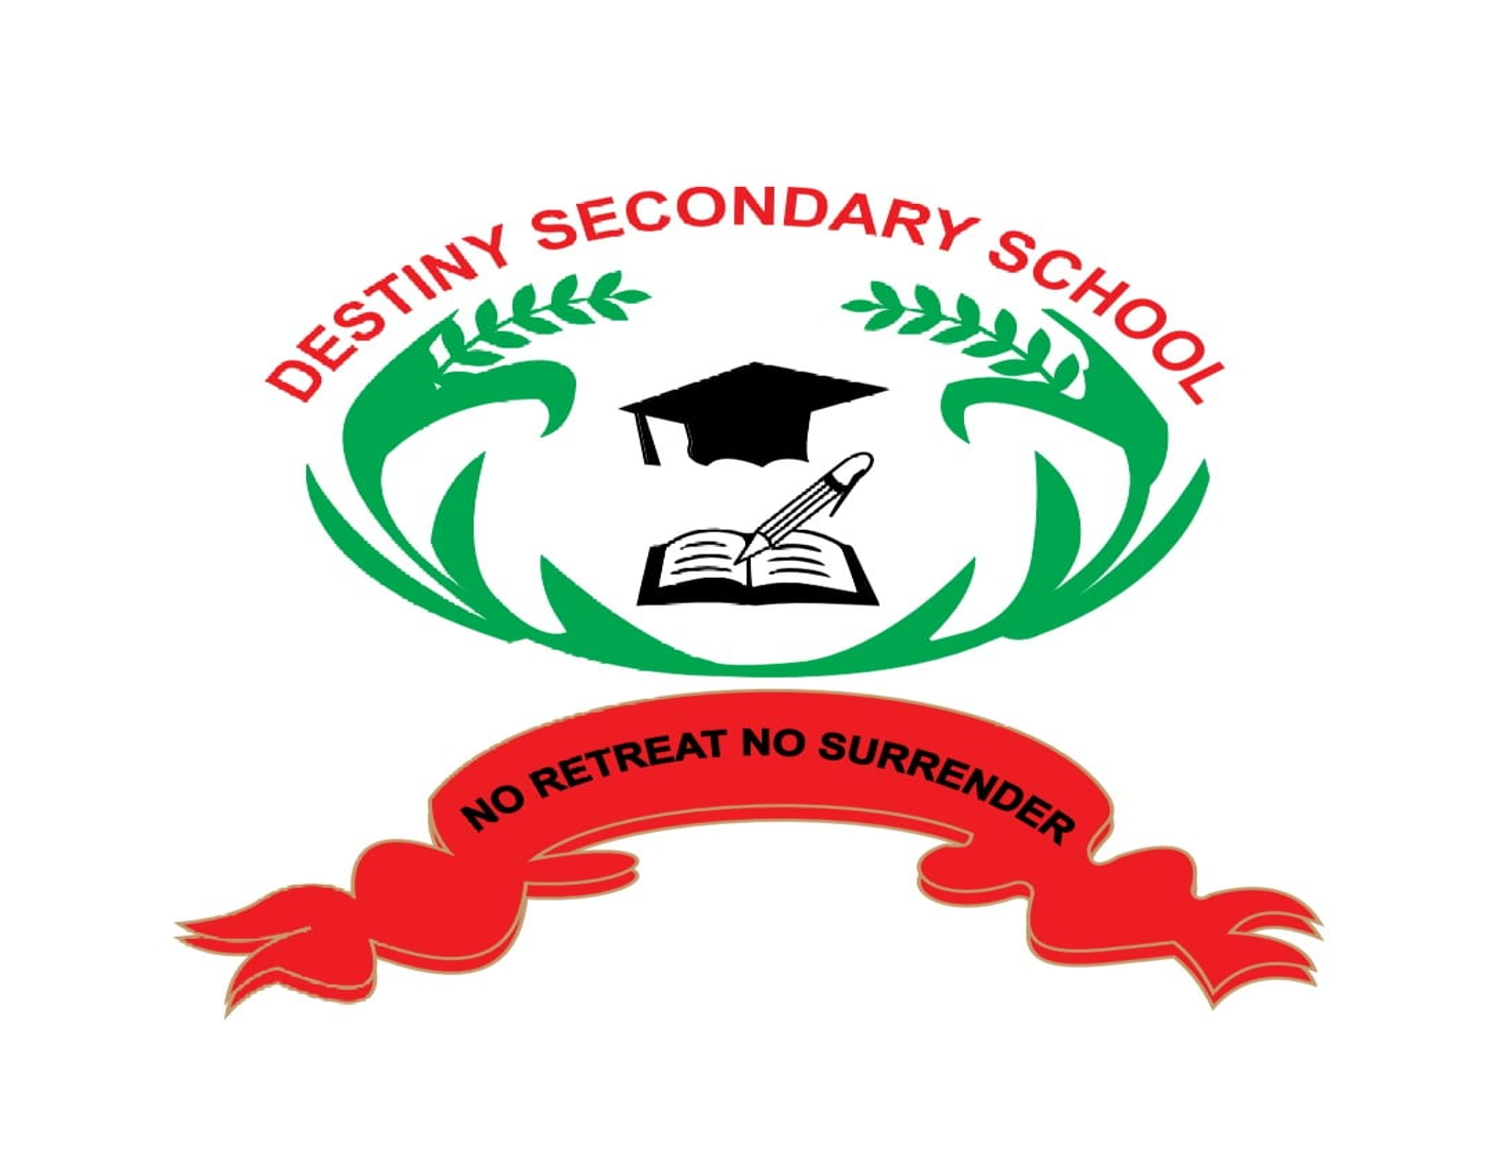 Destiny Secondary School